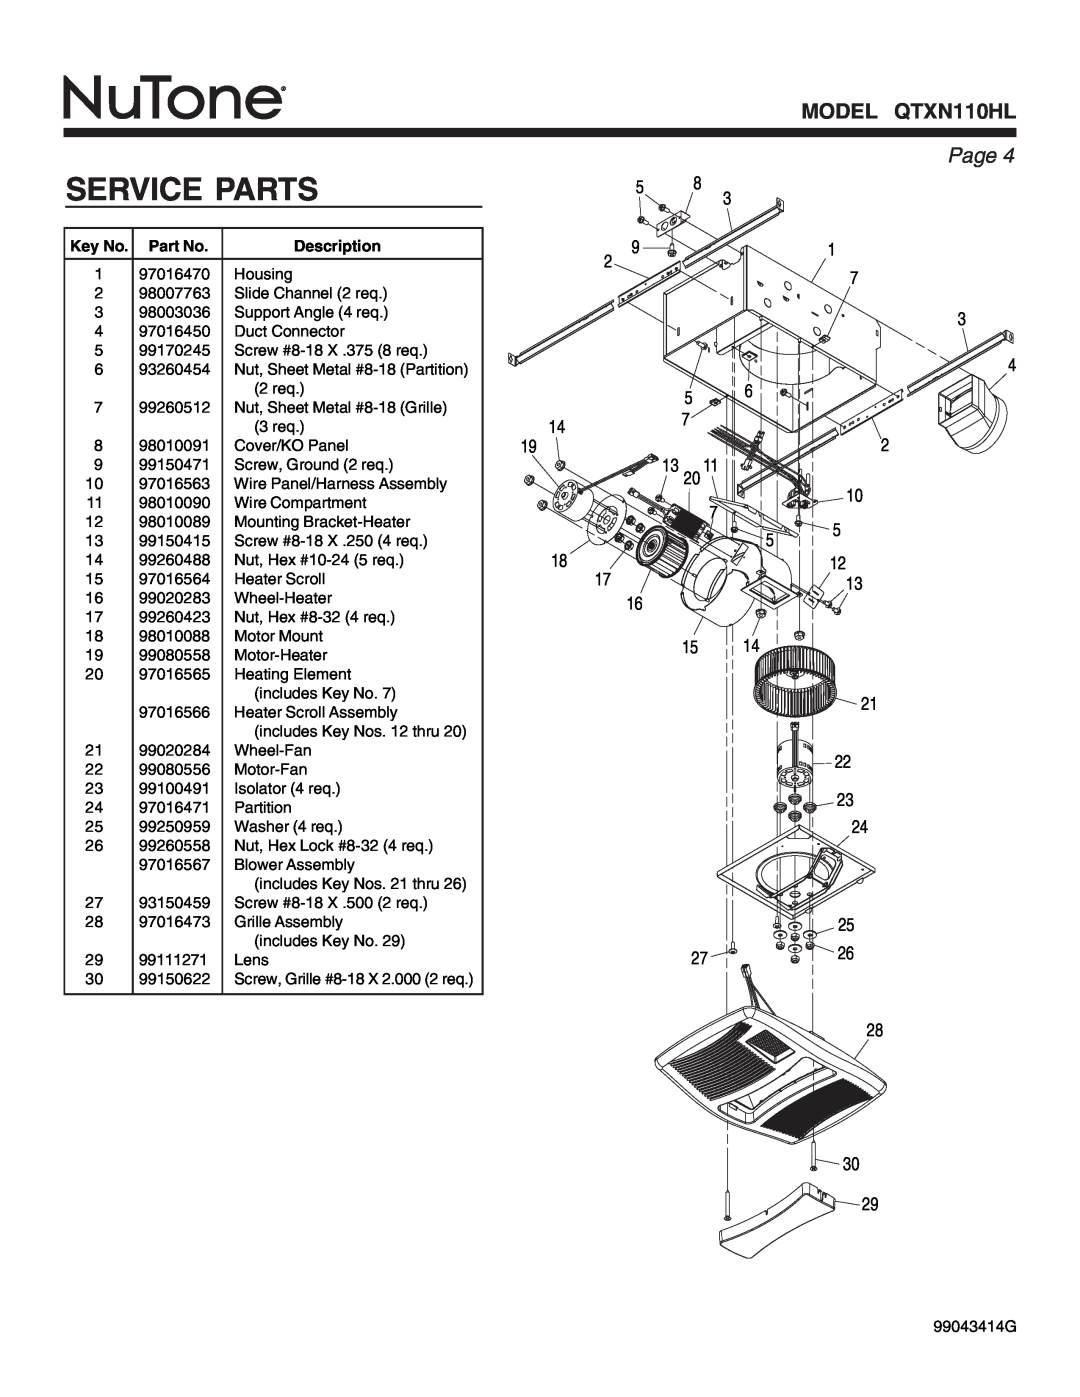 NuTone Service Parts, MODEL QTXN110HL, Page, 13 20 7 5, 2 10 5 12 13 21 22 23 24 25 26 28, Key No. Part No, Description 